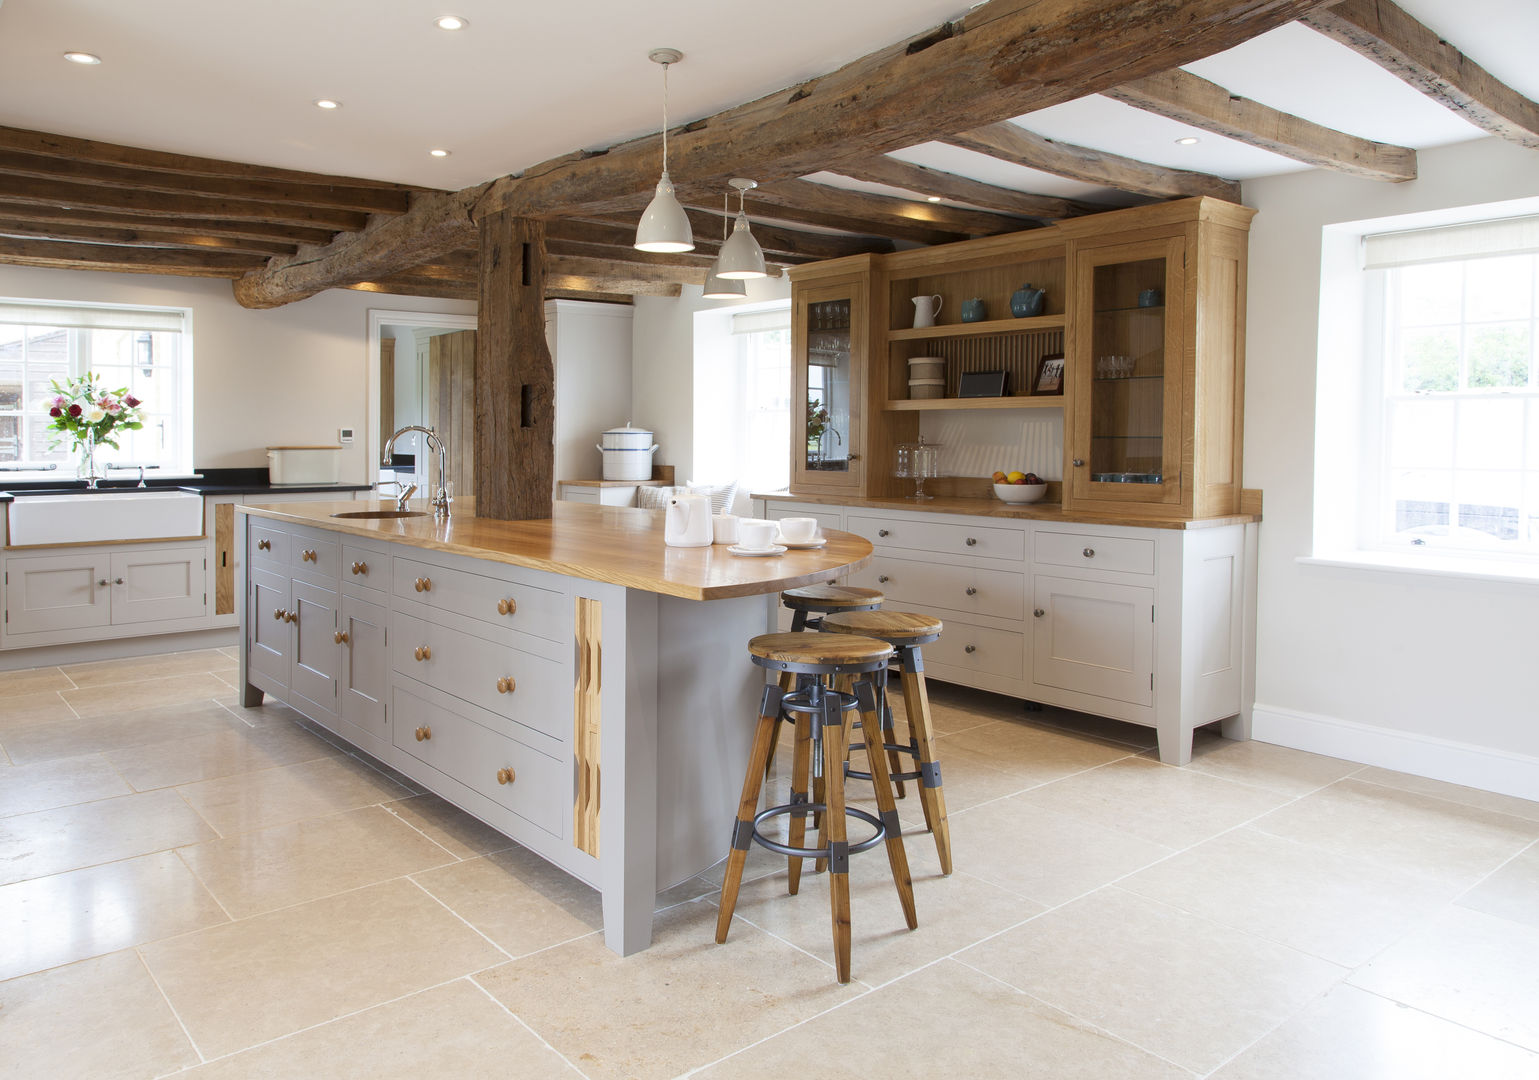 Old English - Bespoke kitchen project in Cambridgeshire Baker & Baker Cuisine rustique dresser,kitchen island,seating,tile flooring,beams,lighting